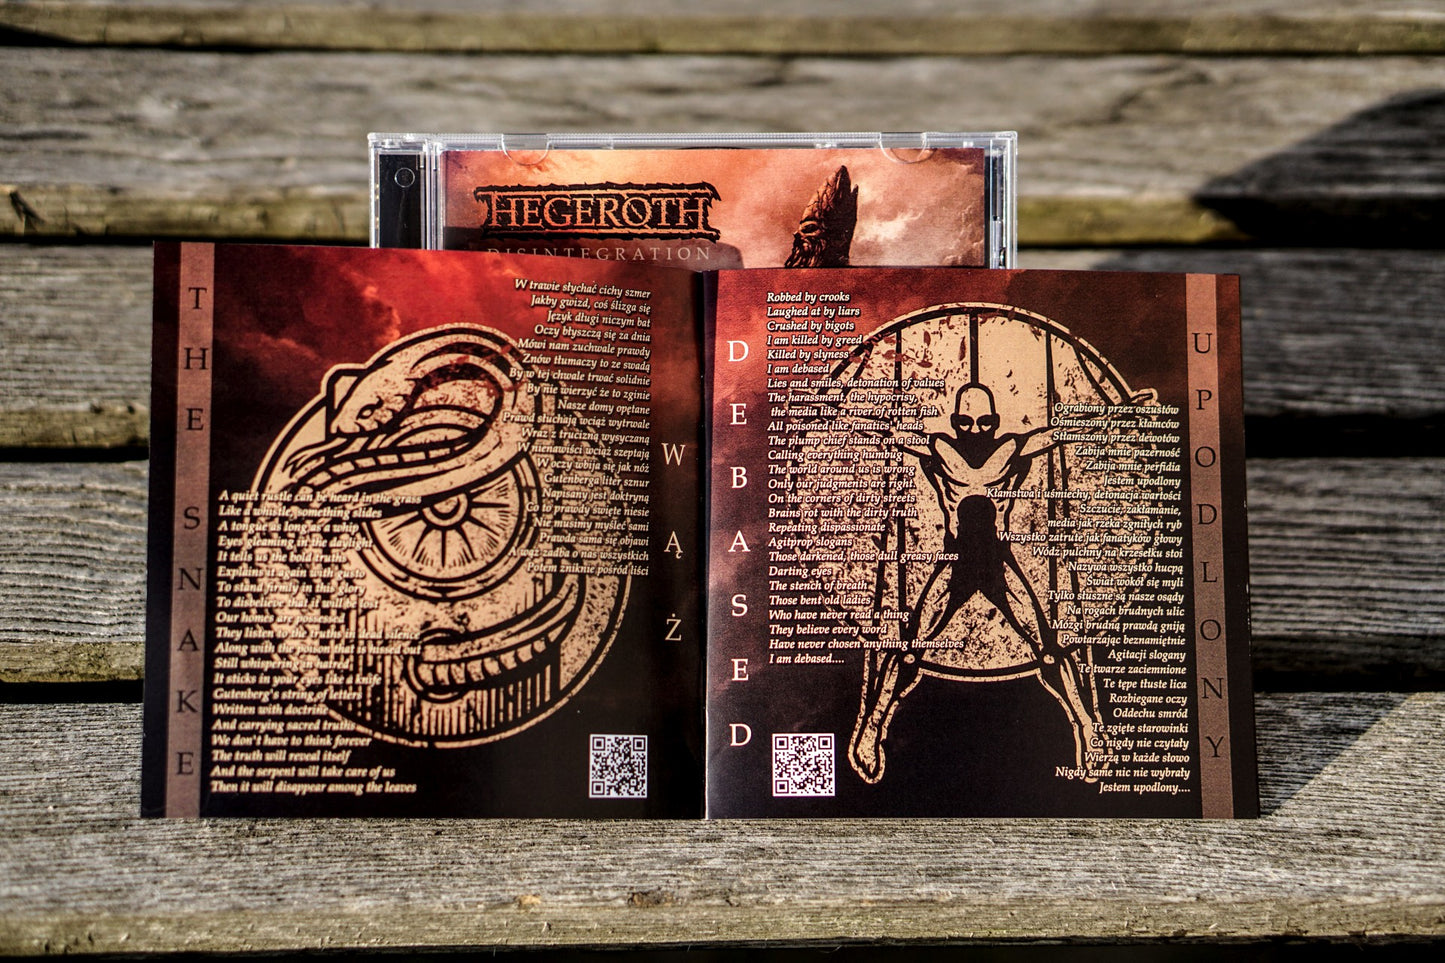 Hegeroth - Disintegration CD jewel